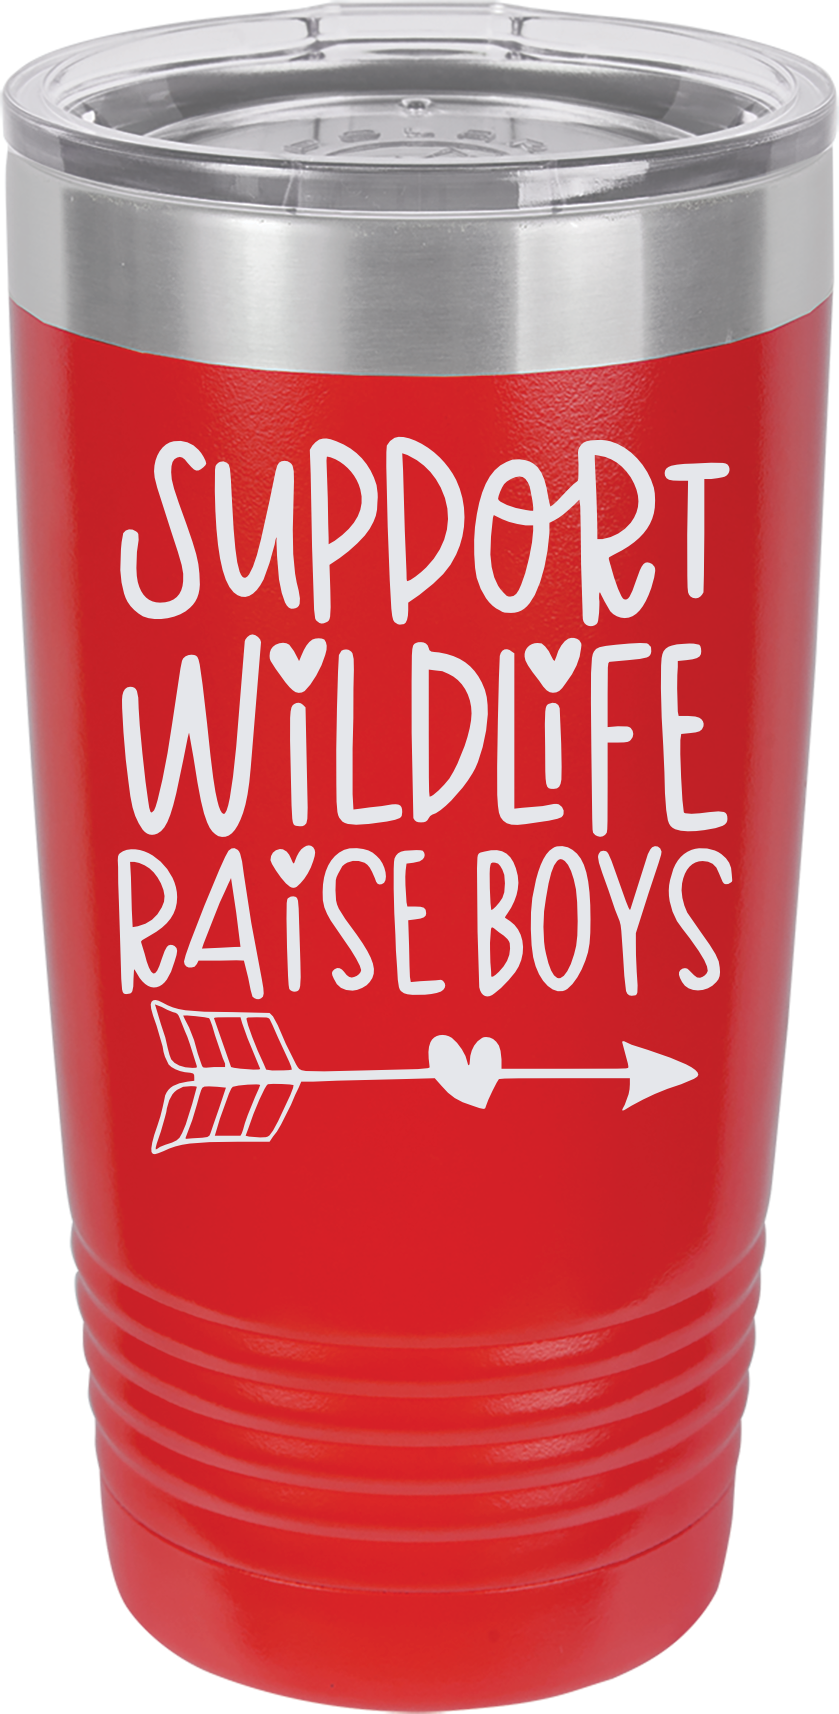 SUPPORT WILDLIFE RAISE BOYS TUMBLER